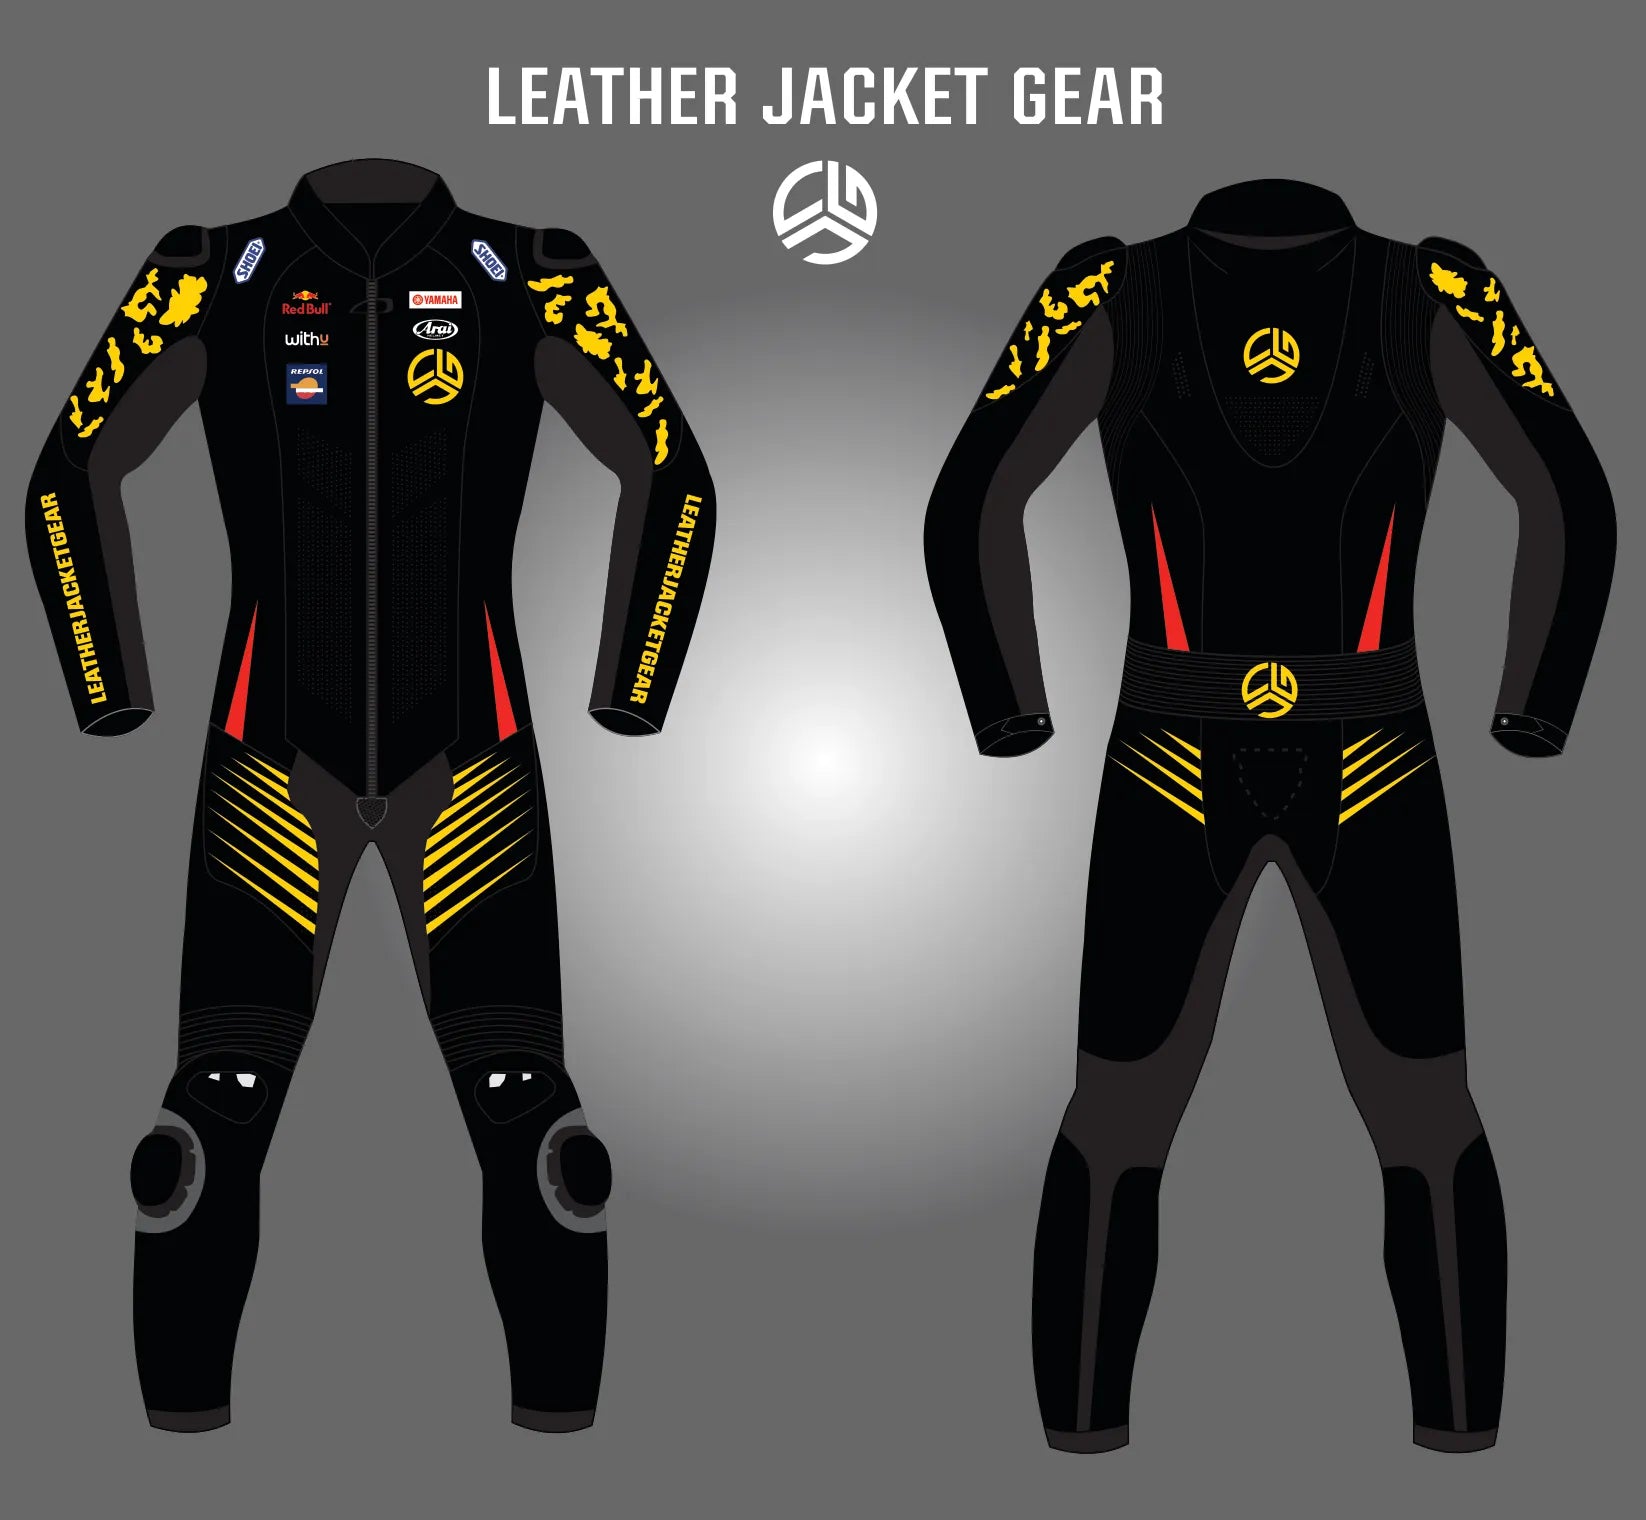 LeatherJacketGear-Black-Gray-Gold-Race-Suit